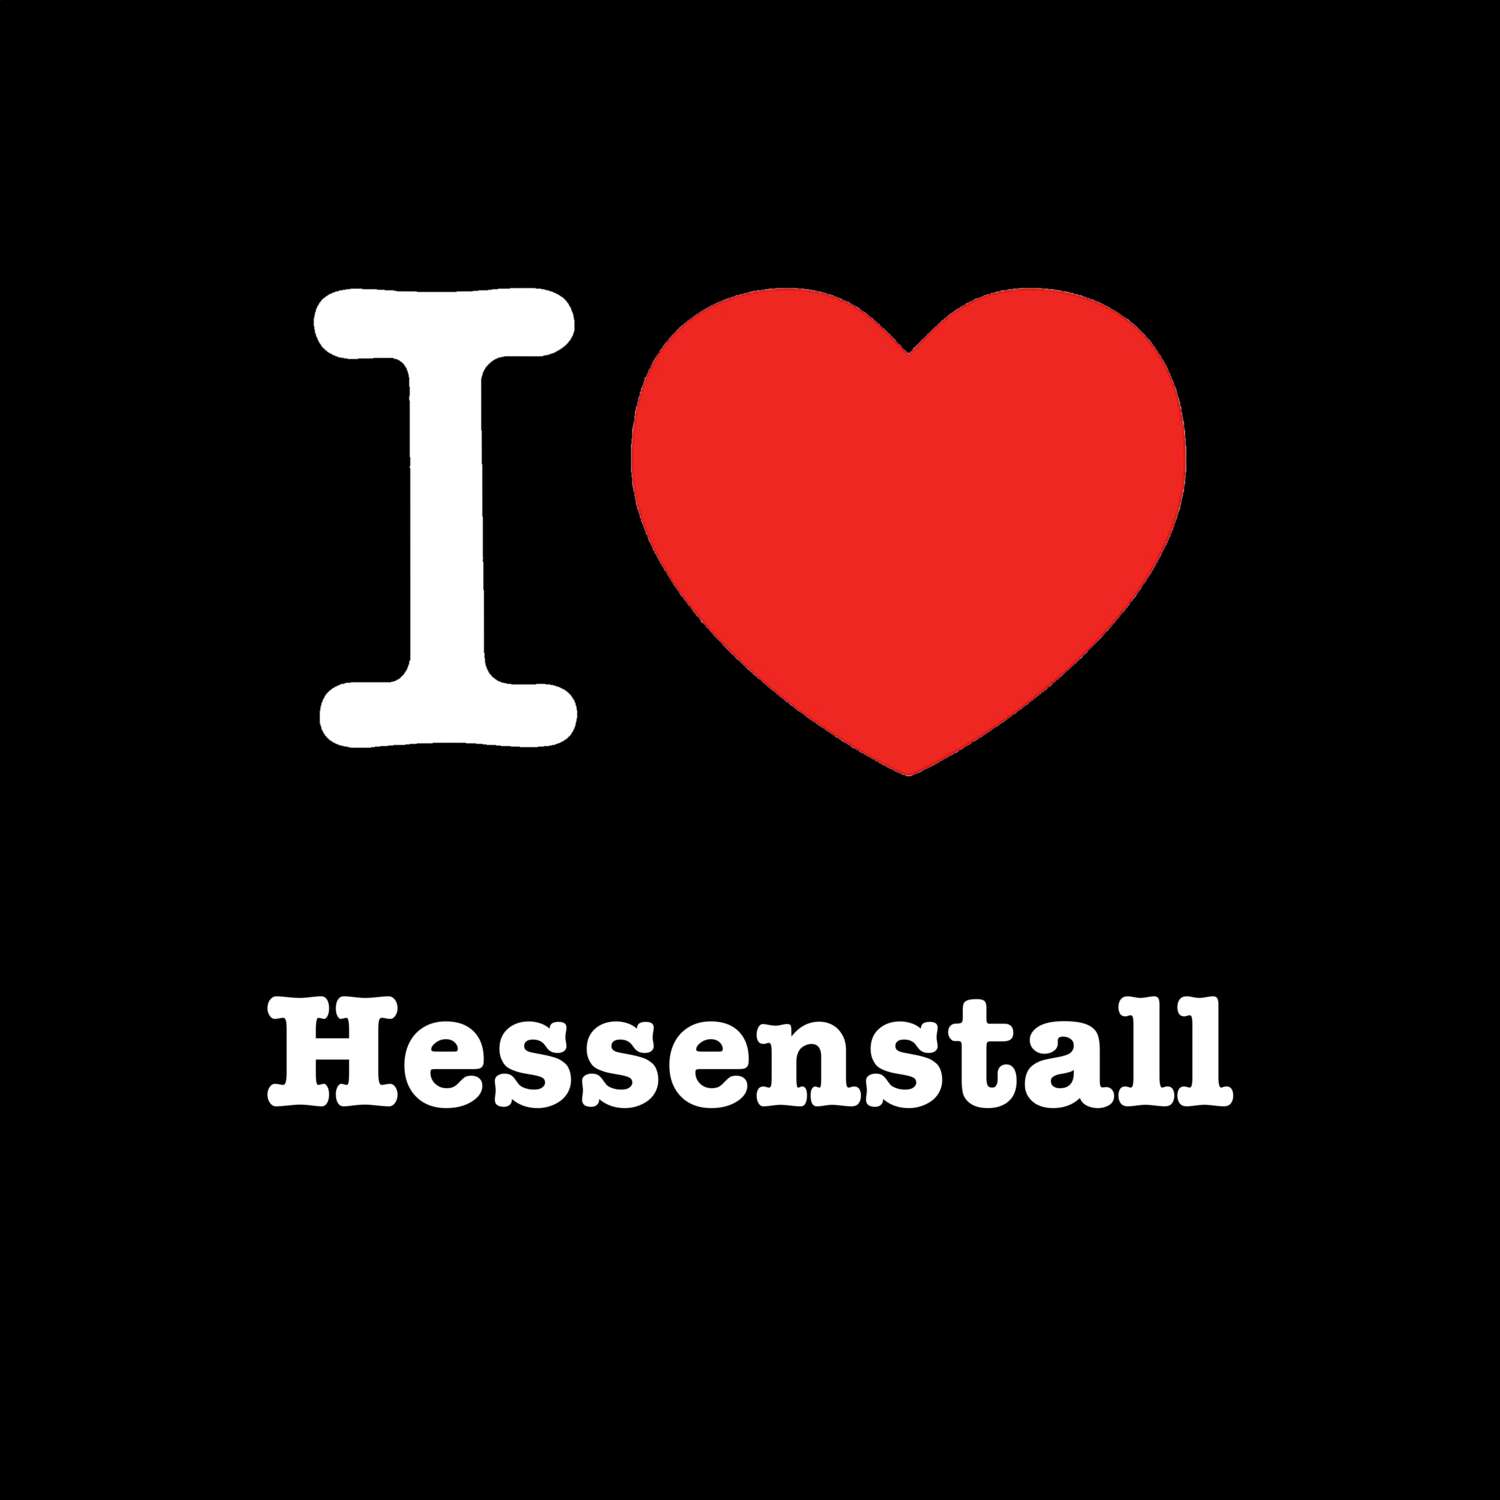 Hessenstall T-Shirt »I love«